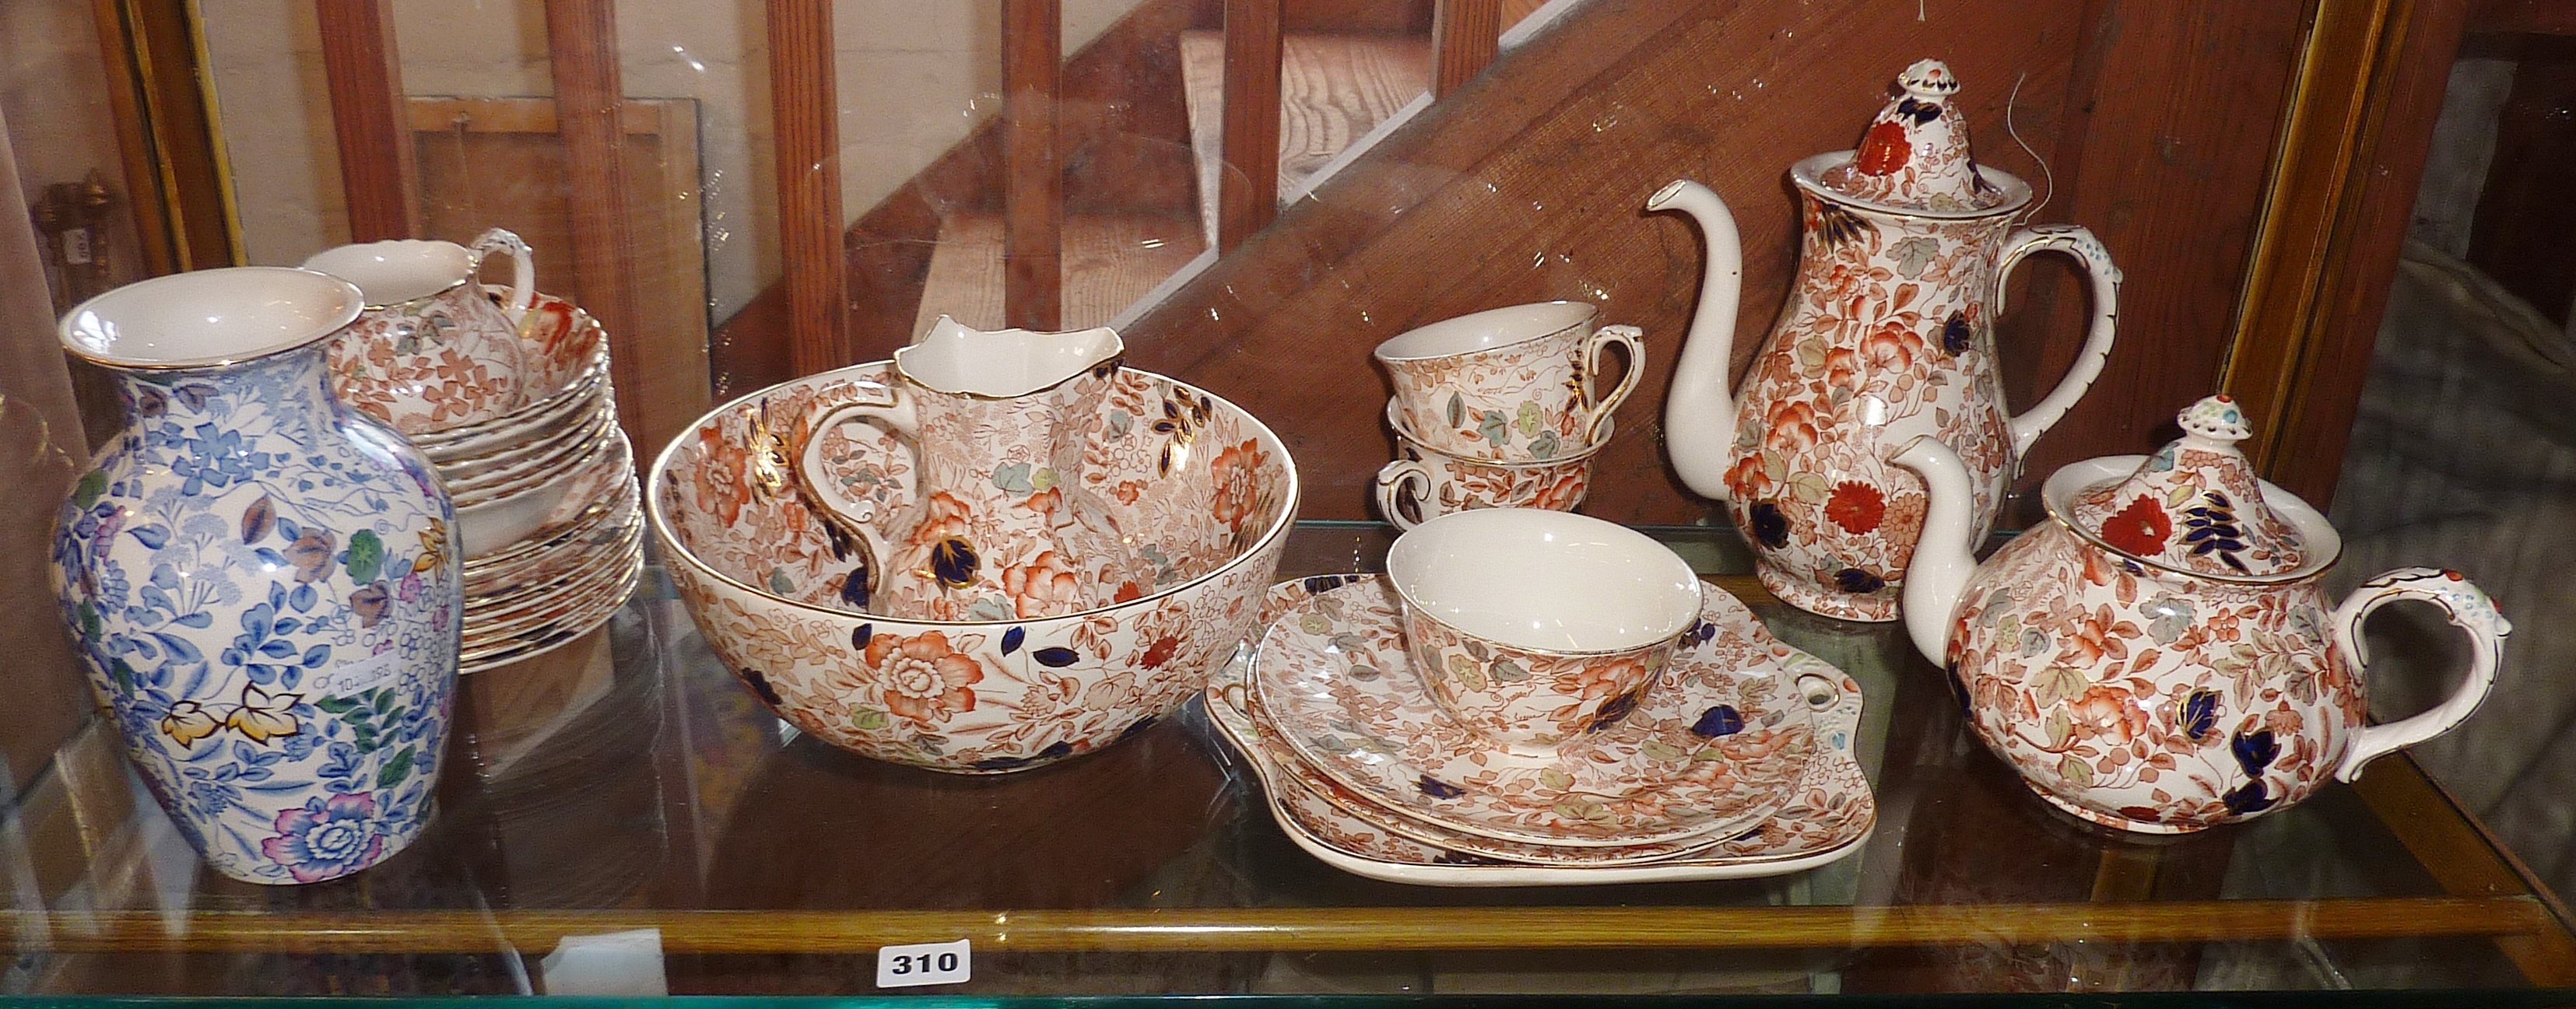 Masons 'Bittersweet' pattern teapot, coffee pot, jugs, bowls, plates and a 'Bittersweet Blue' vase